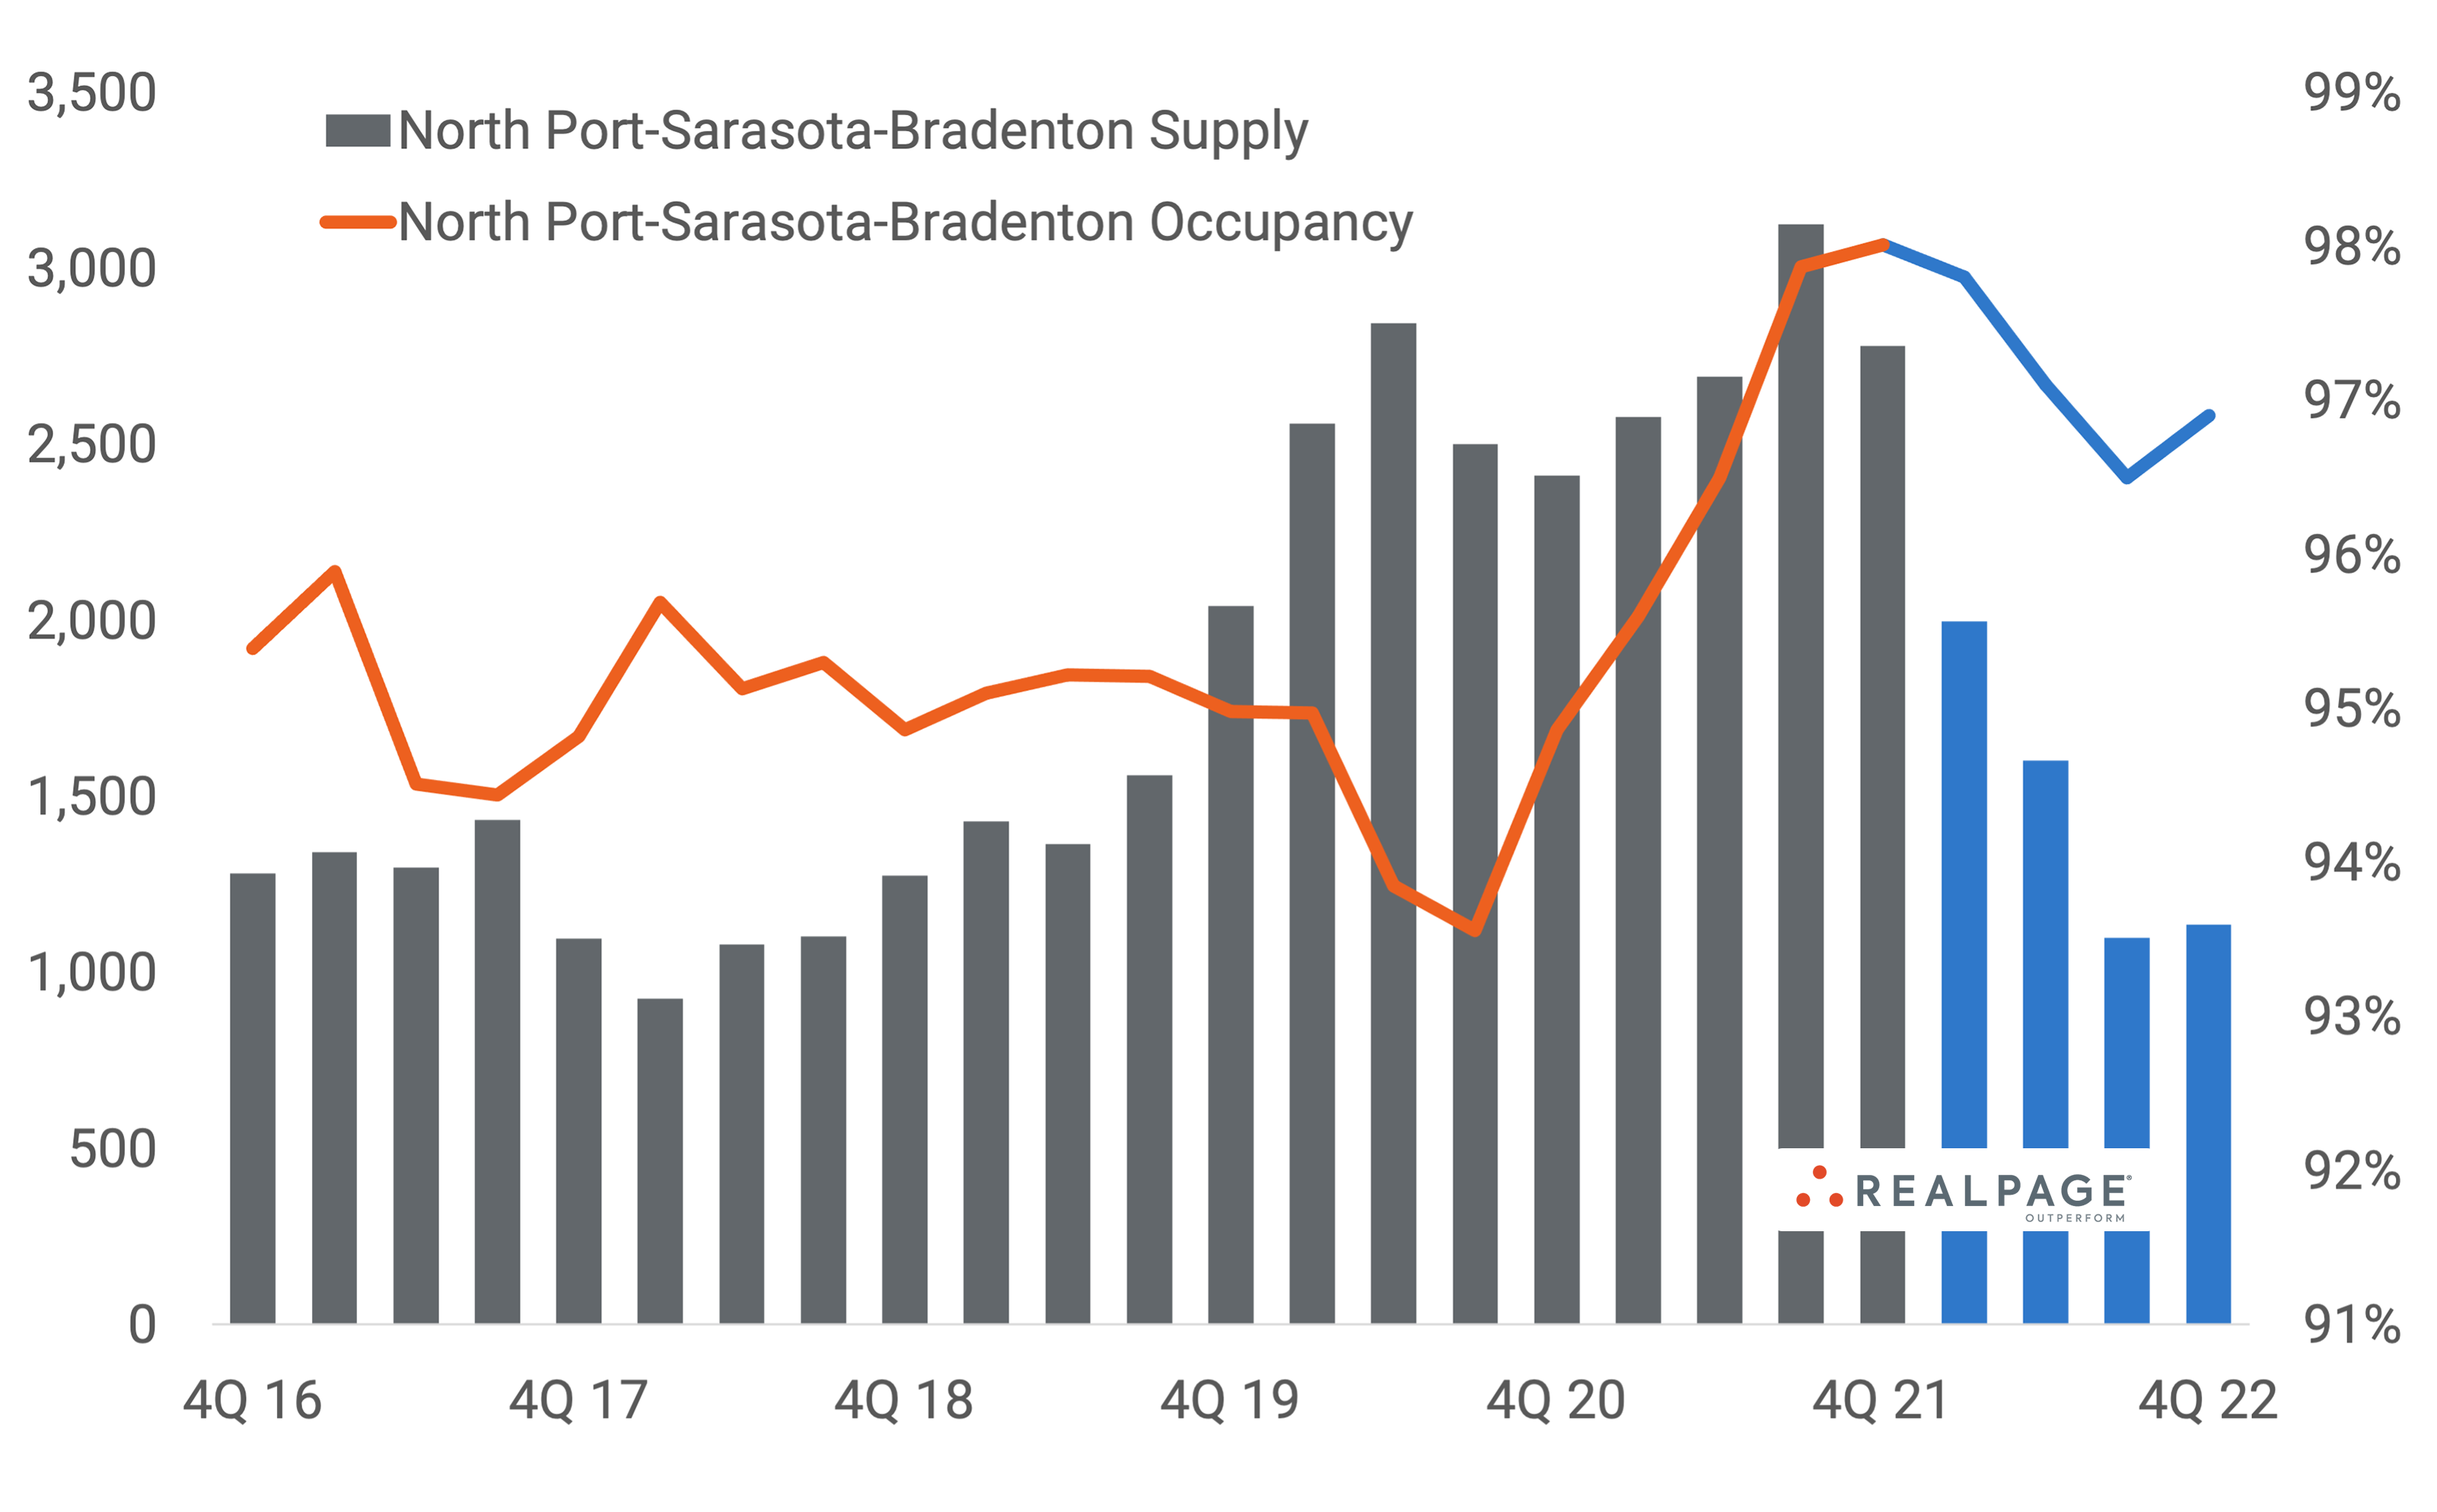 Supply Scheduled to Drop Off in North Port-Sarasota-Bradenton